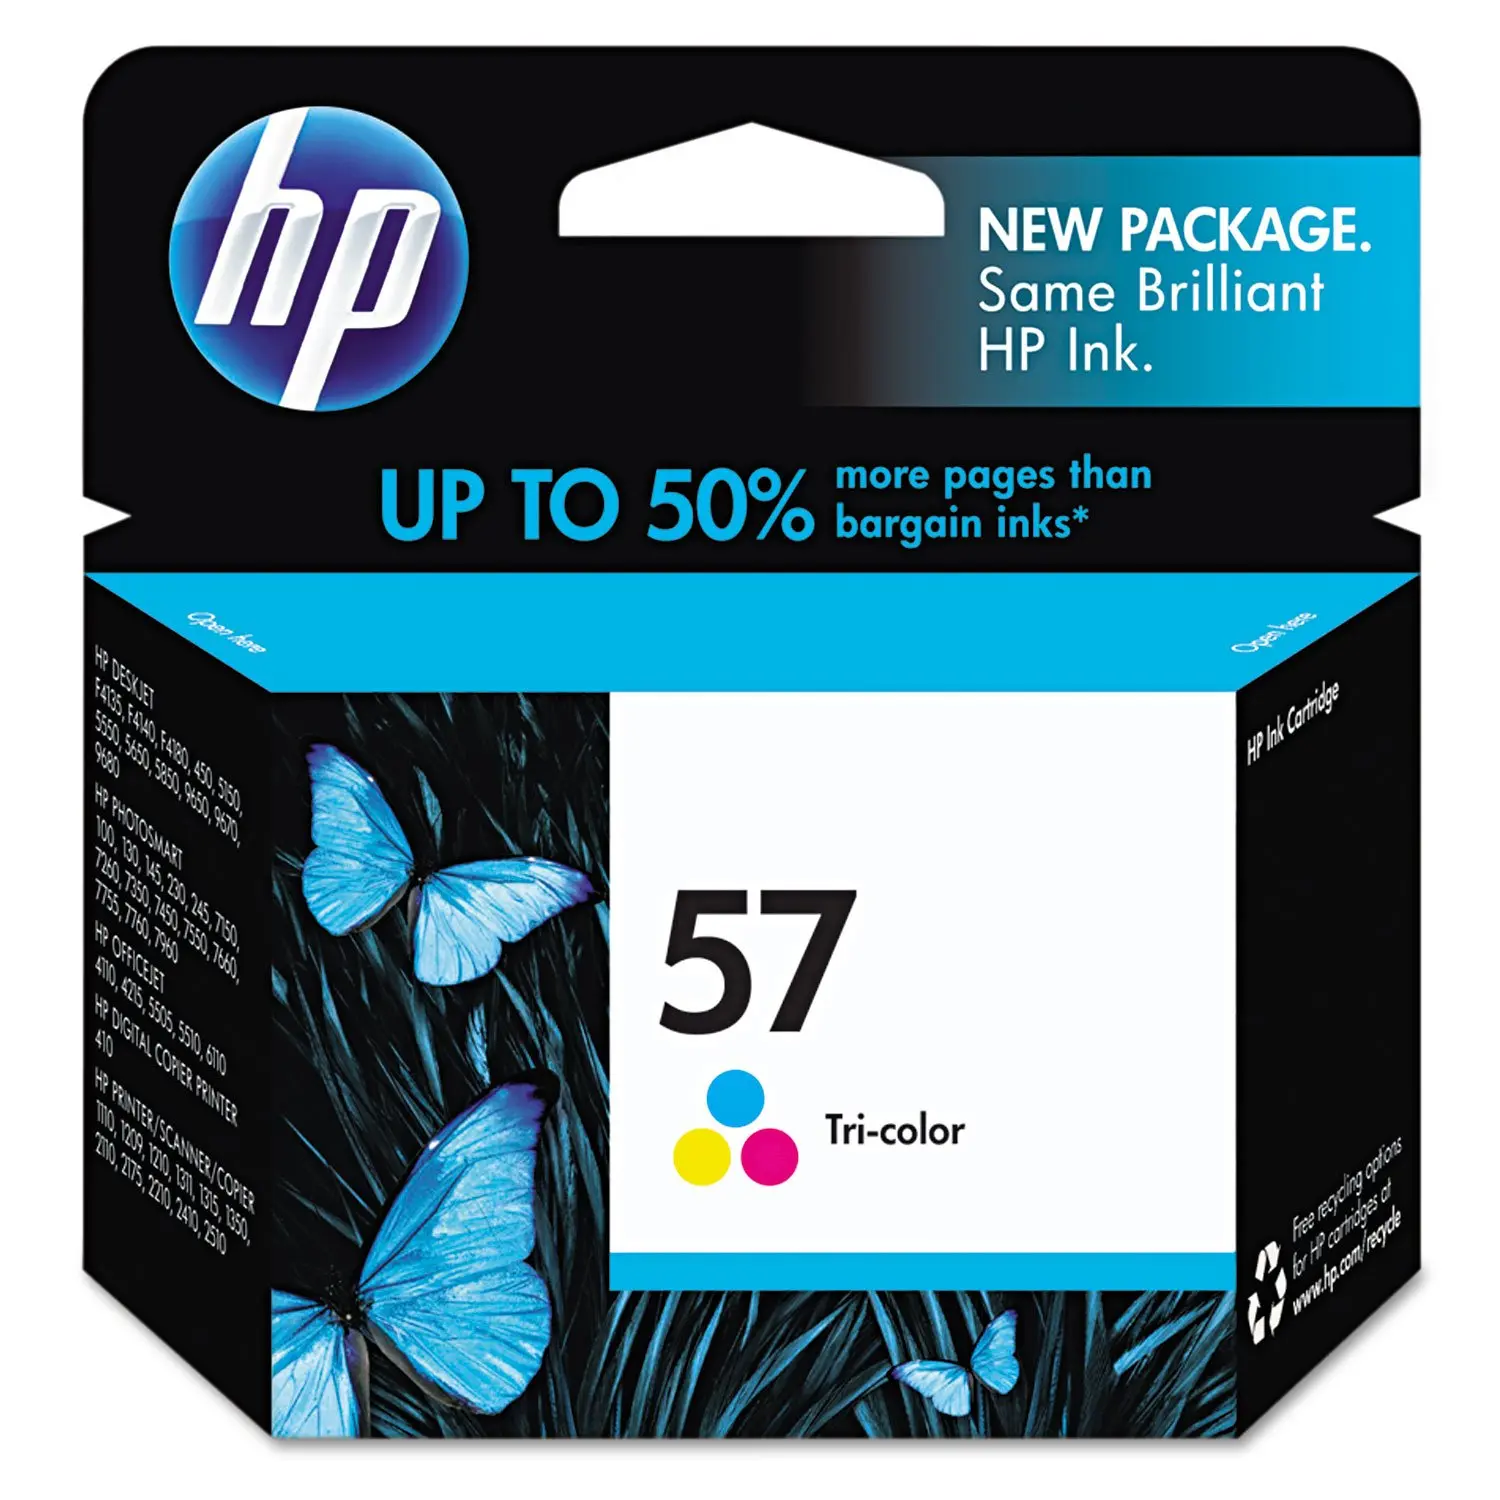 Hp 410 printer ink cartridges: a comprehensive guide